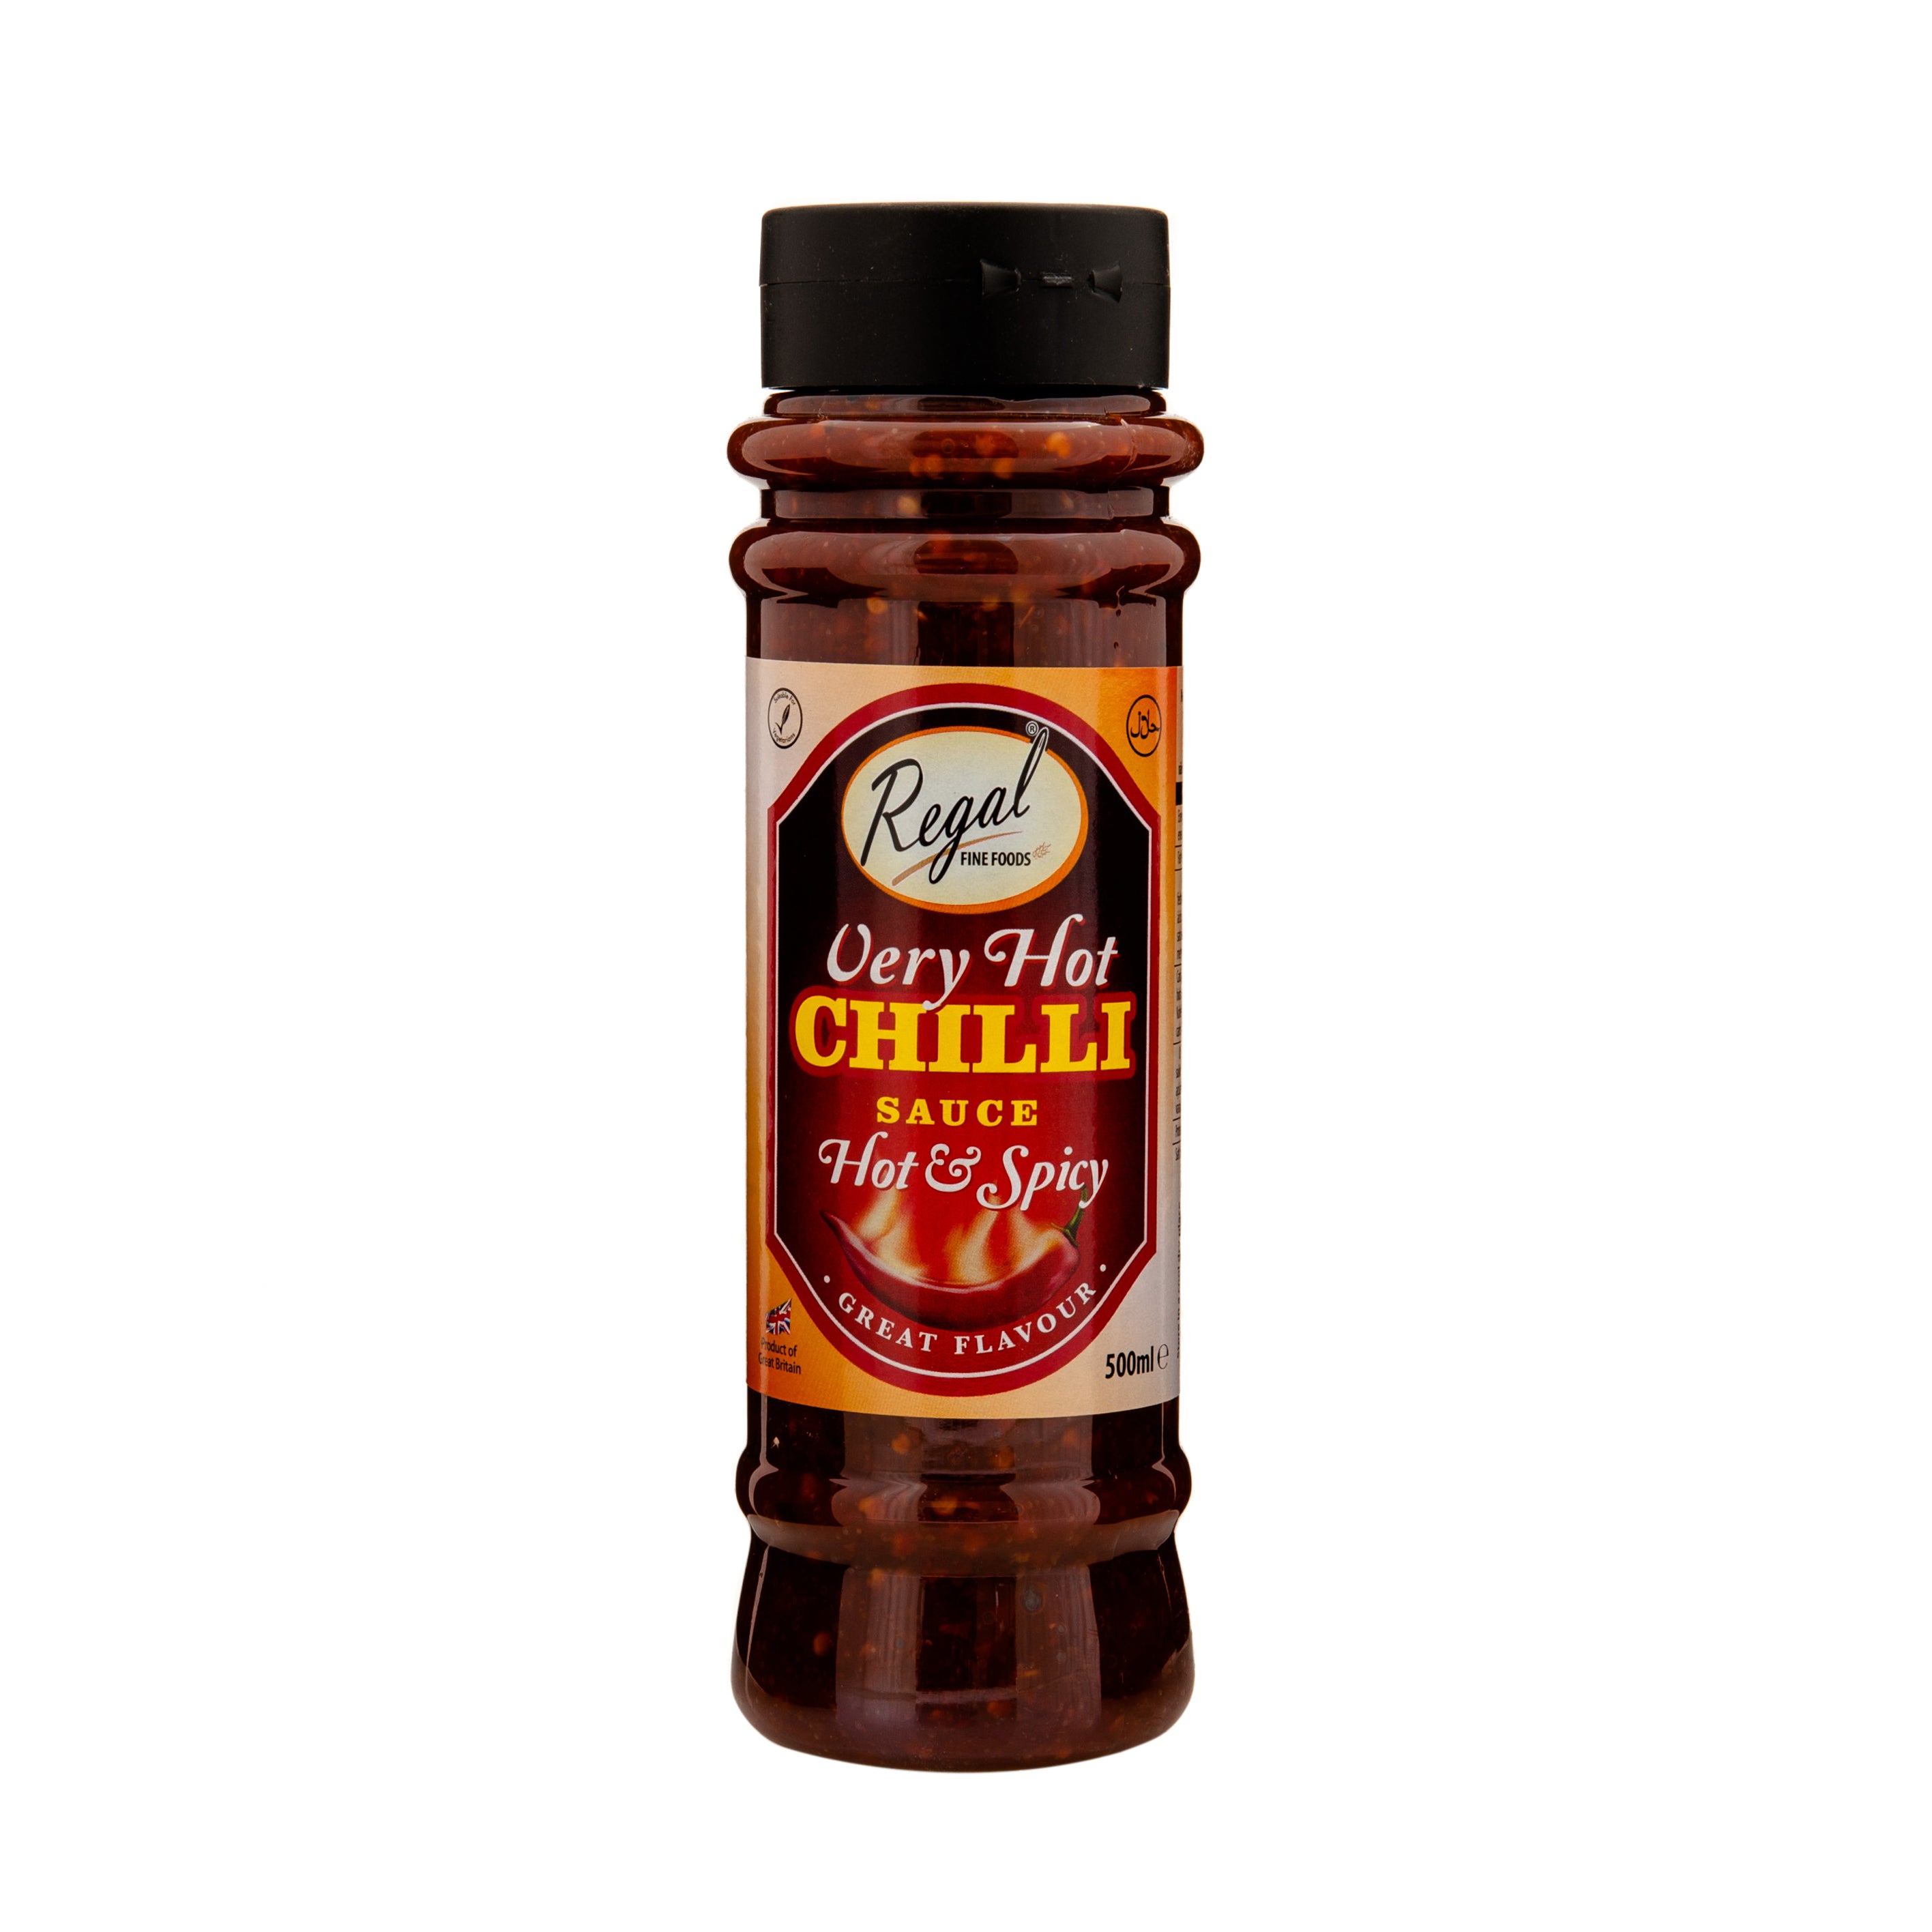 Regal Very Hot Chilli Sauce - SaveCo Cash & Carry